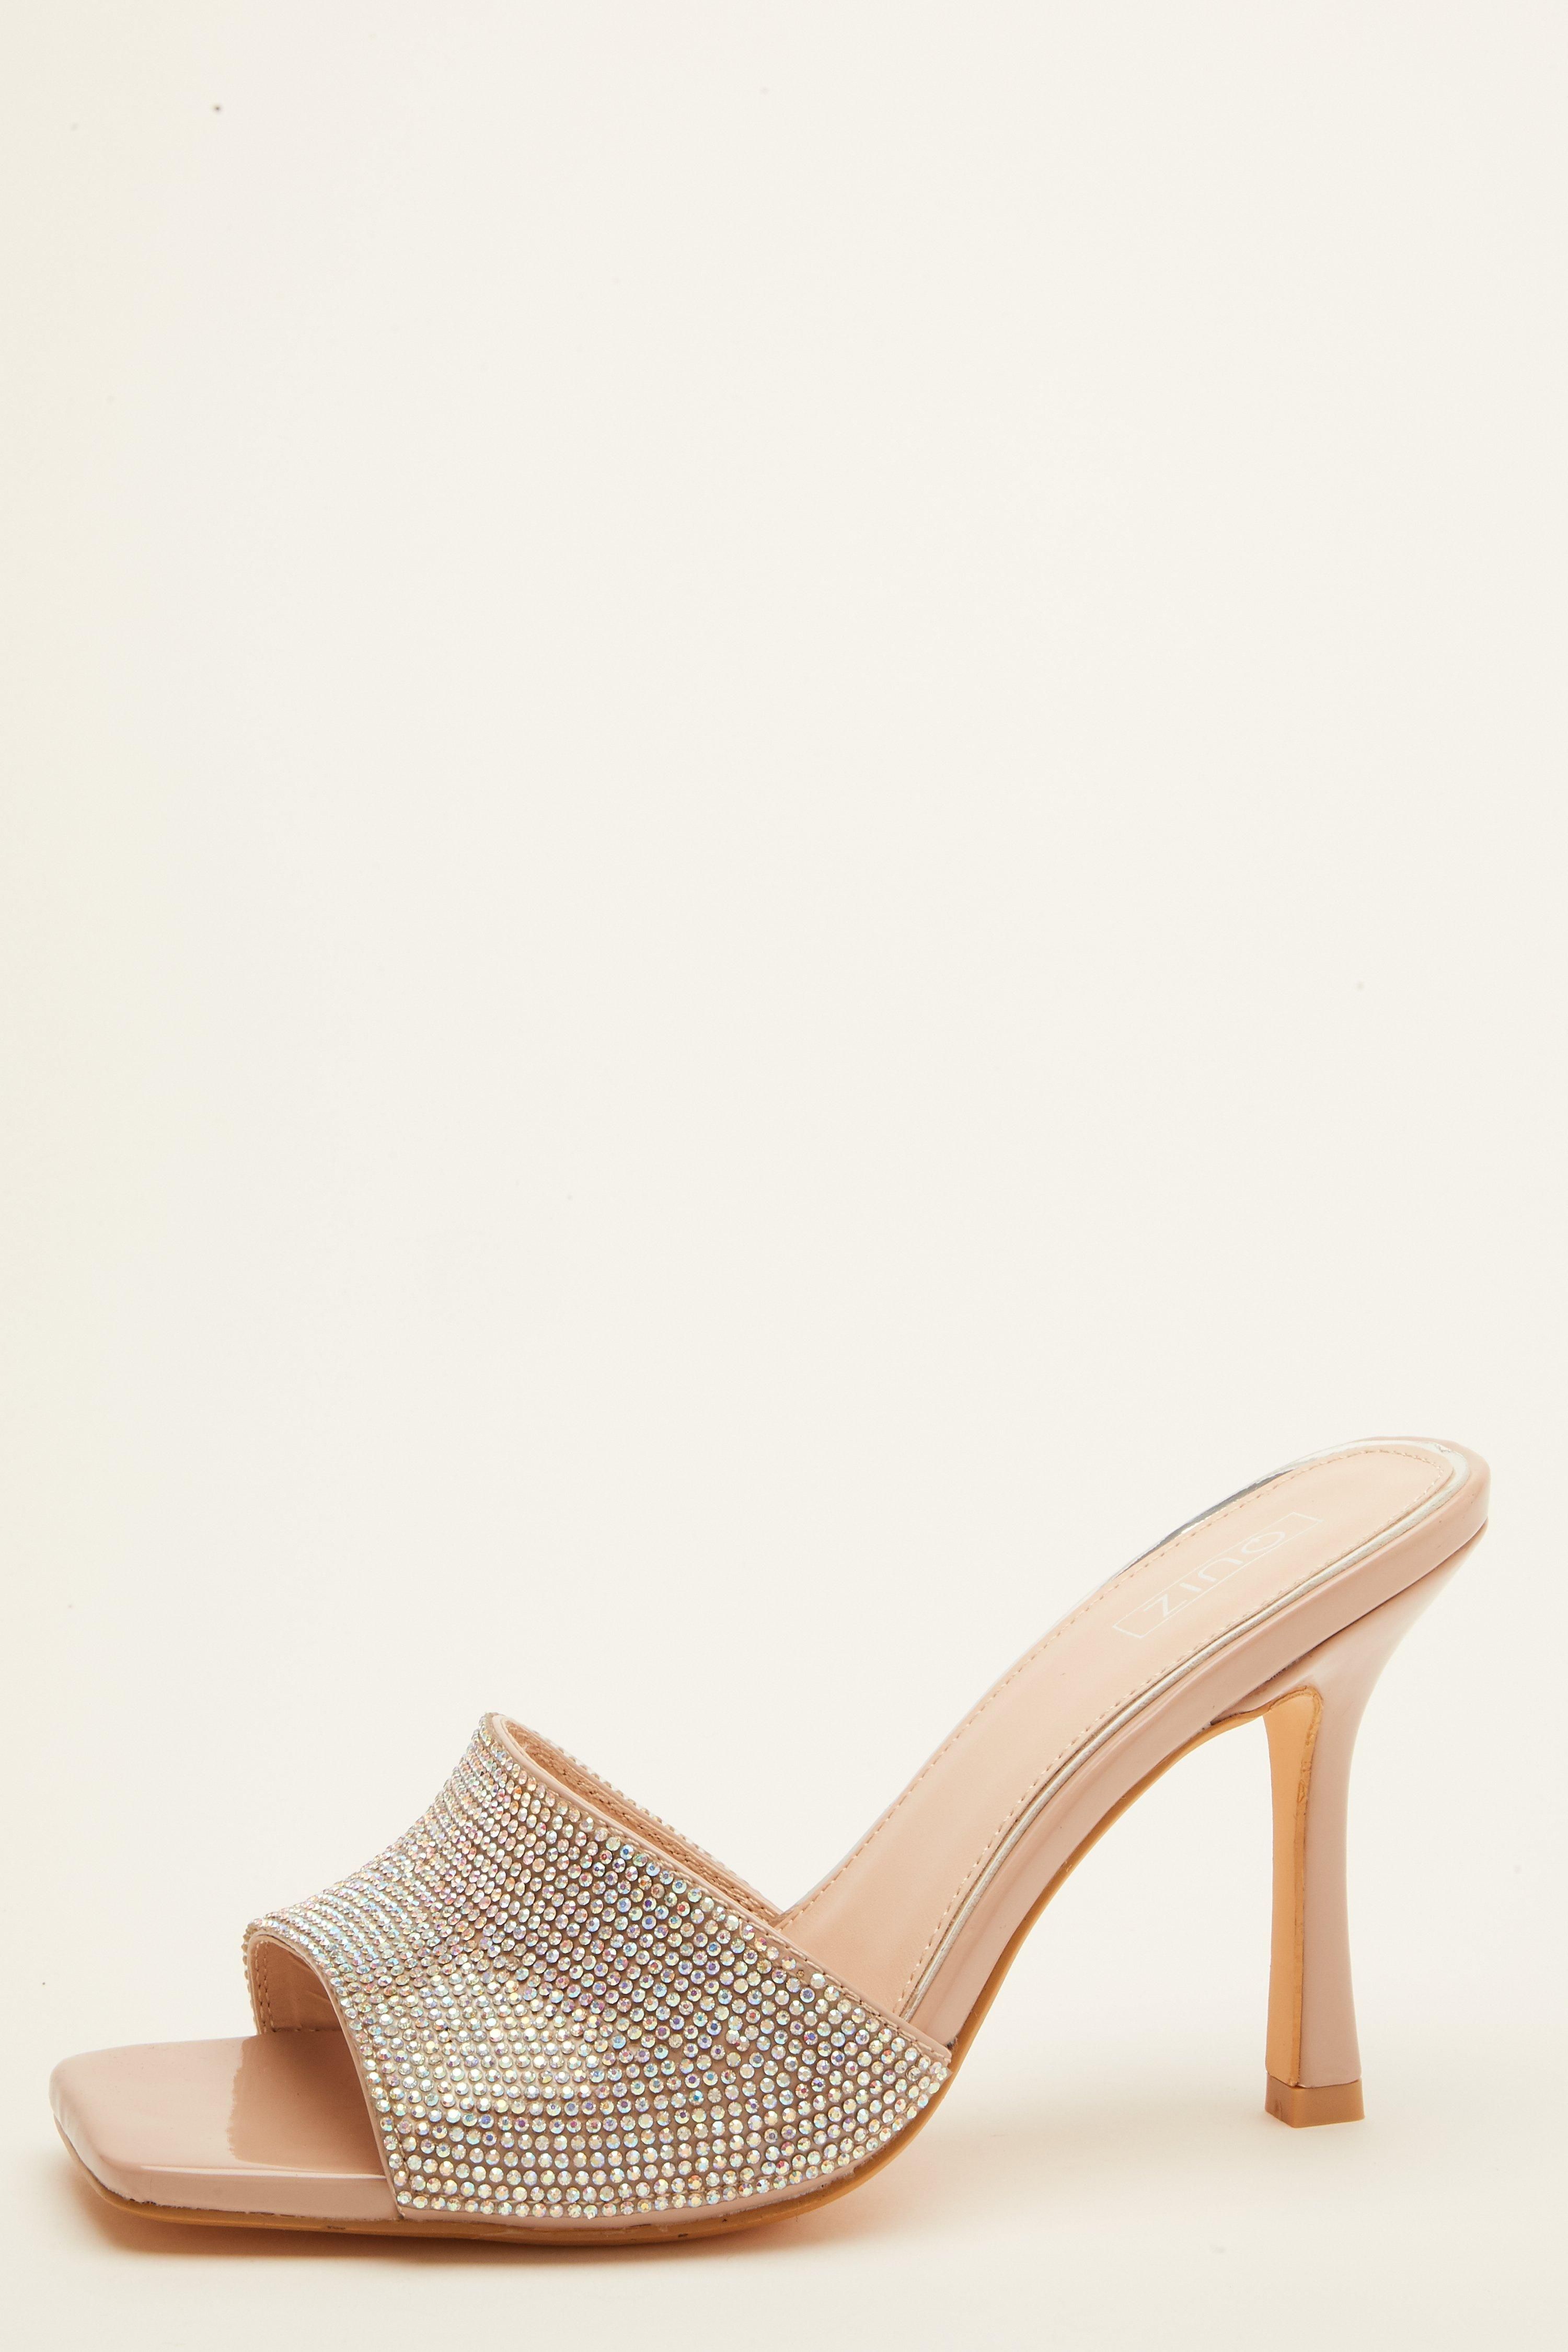 - Slip on style  - Diamante strap   - Mule style  - Flare heel  - Heel height: 4.5